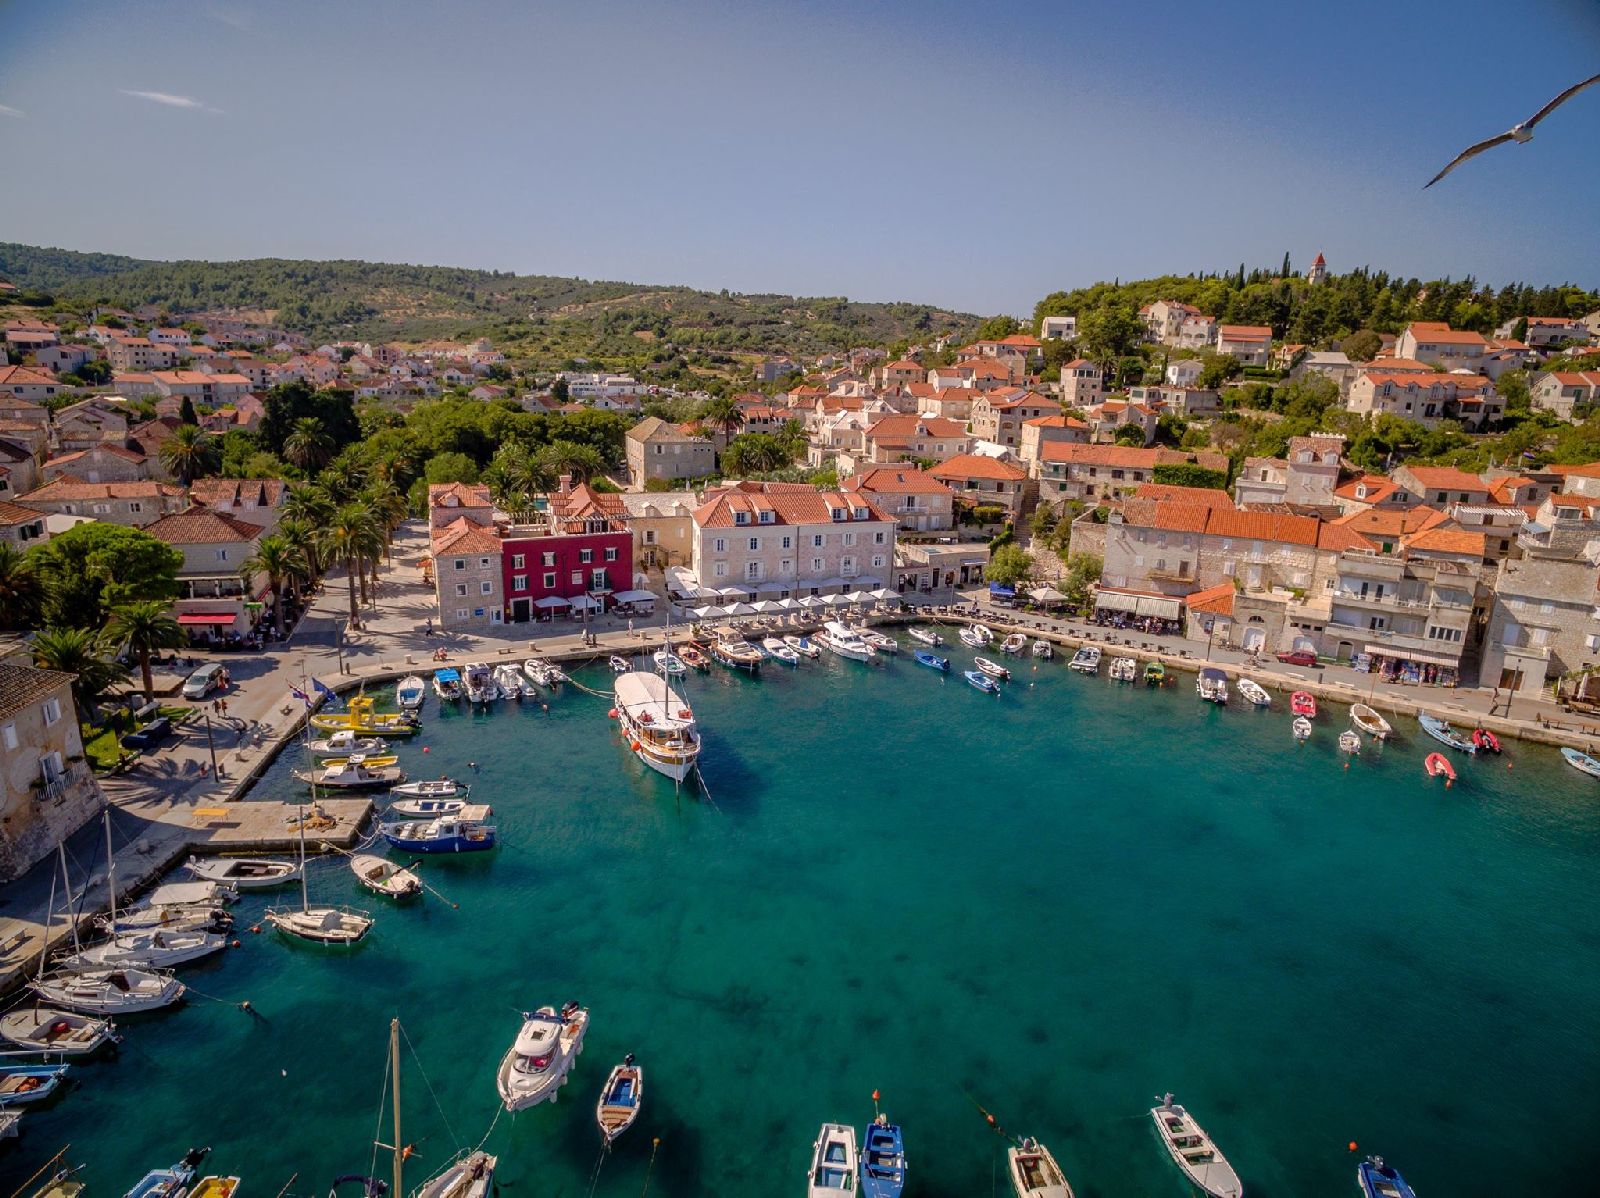 Hotel Lemongarden and the harbour on Brac island Croatia